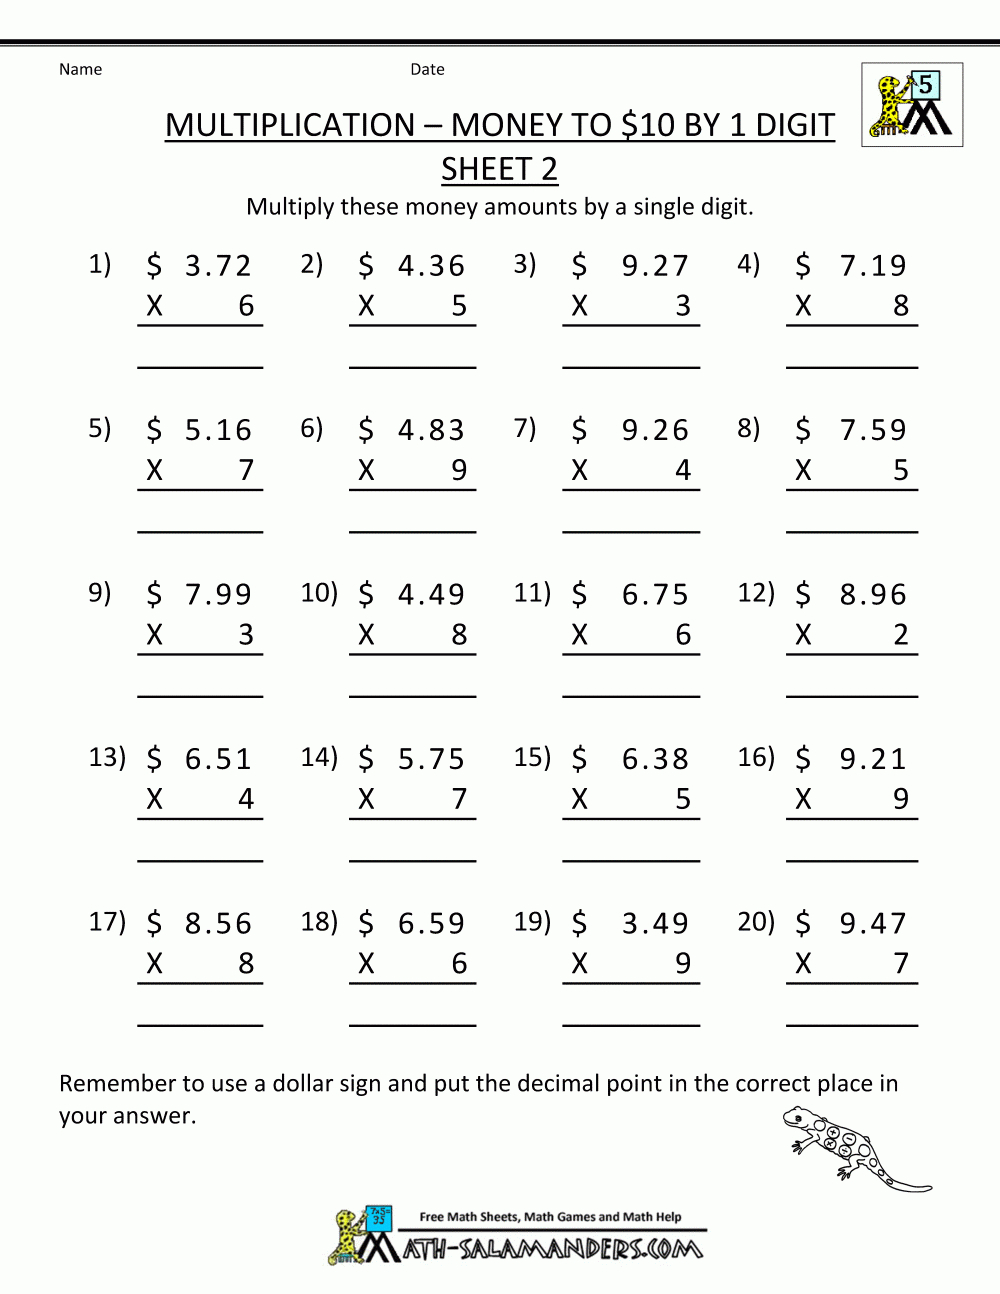 Worksheet Ideas ~ 5Th Grade Multiplication Worksheets regarding Printable Multiplication Problems For 5Th Grade